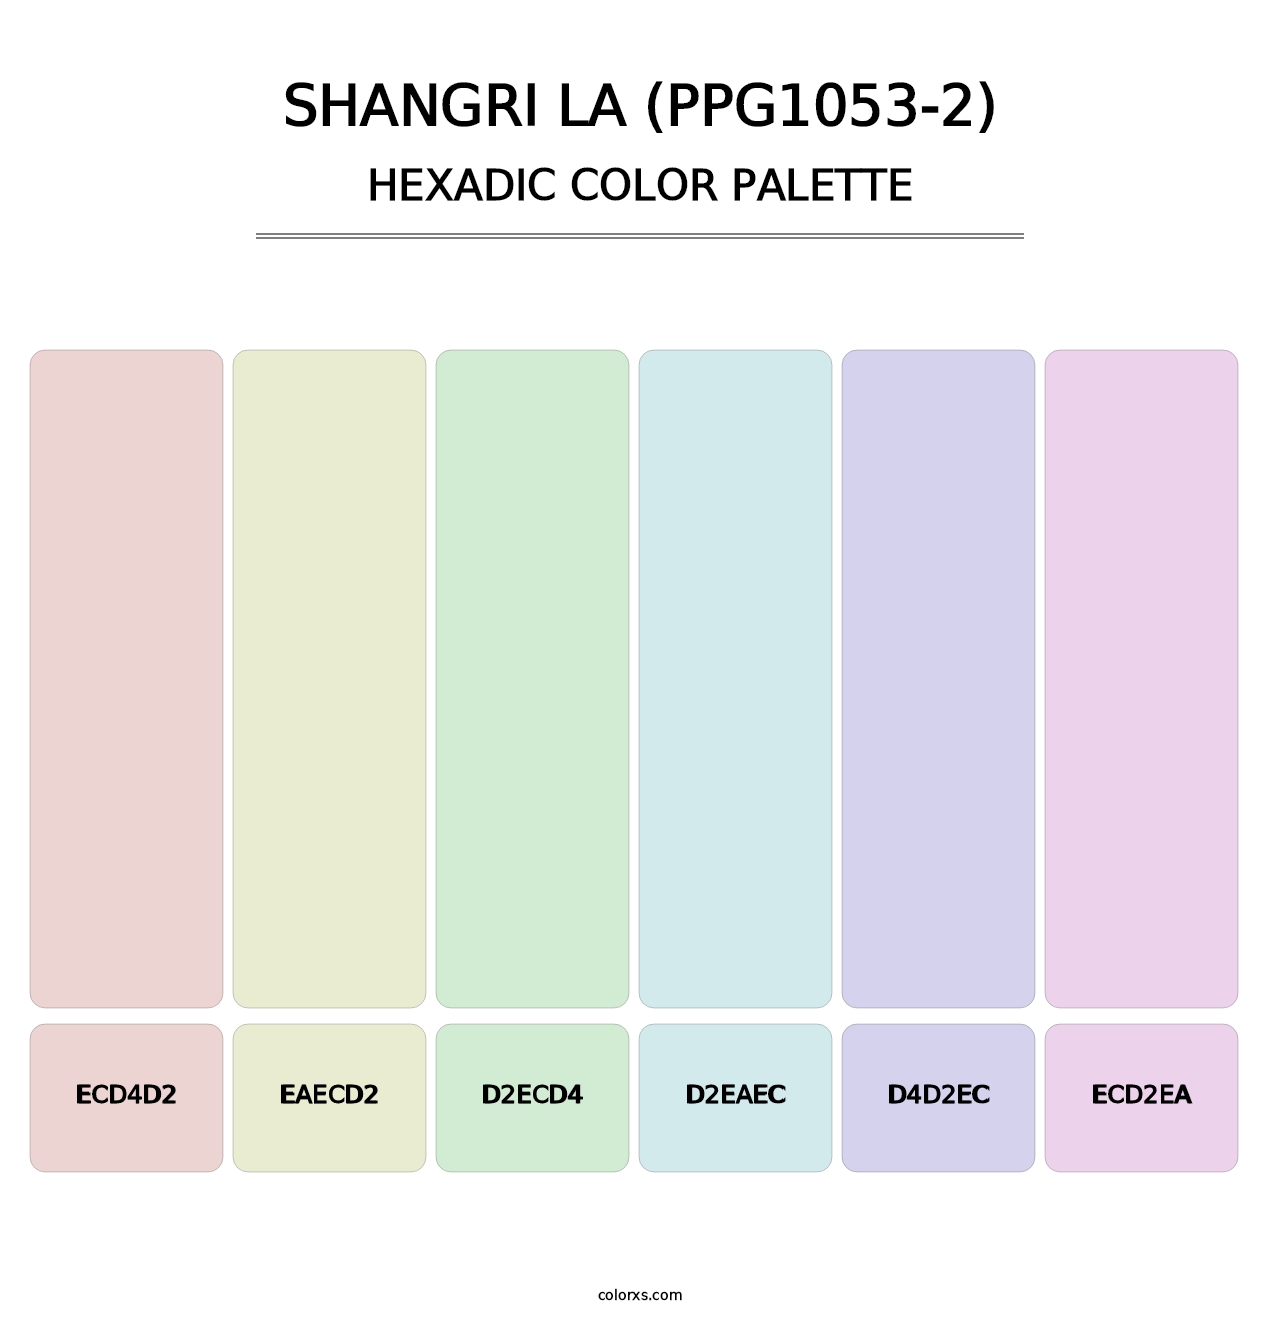 Shangri La (PPG1053-2) - Hexadic Color Palette